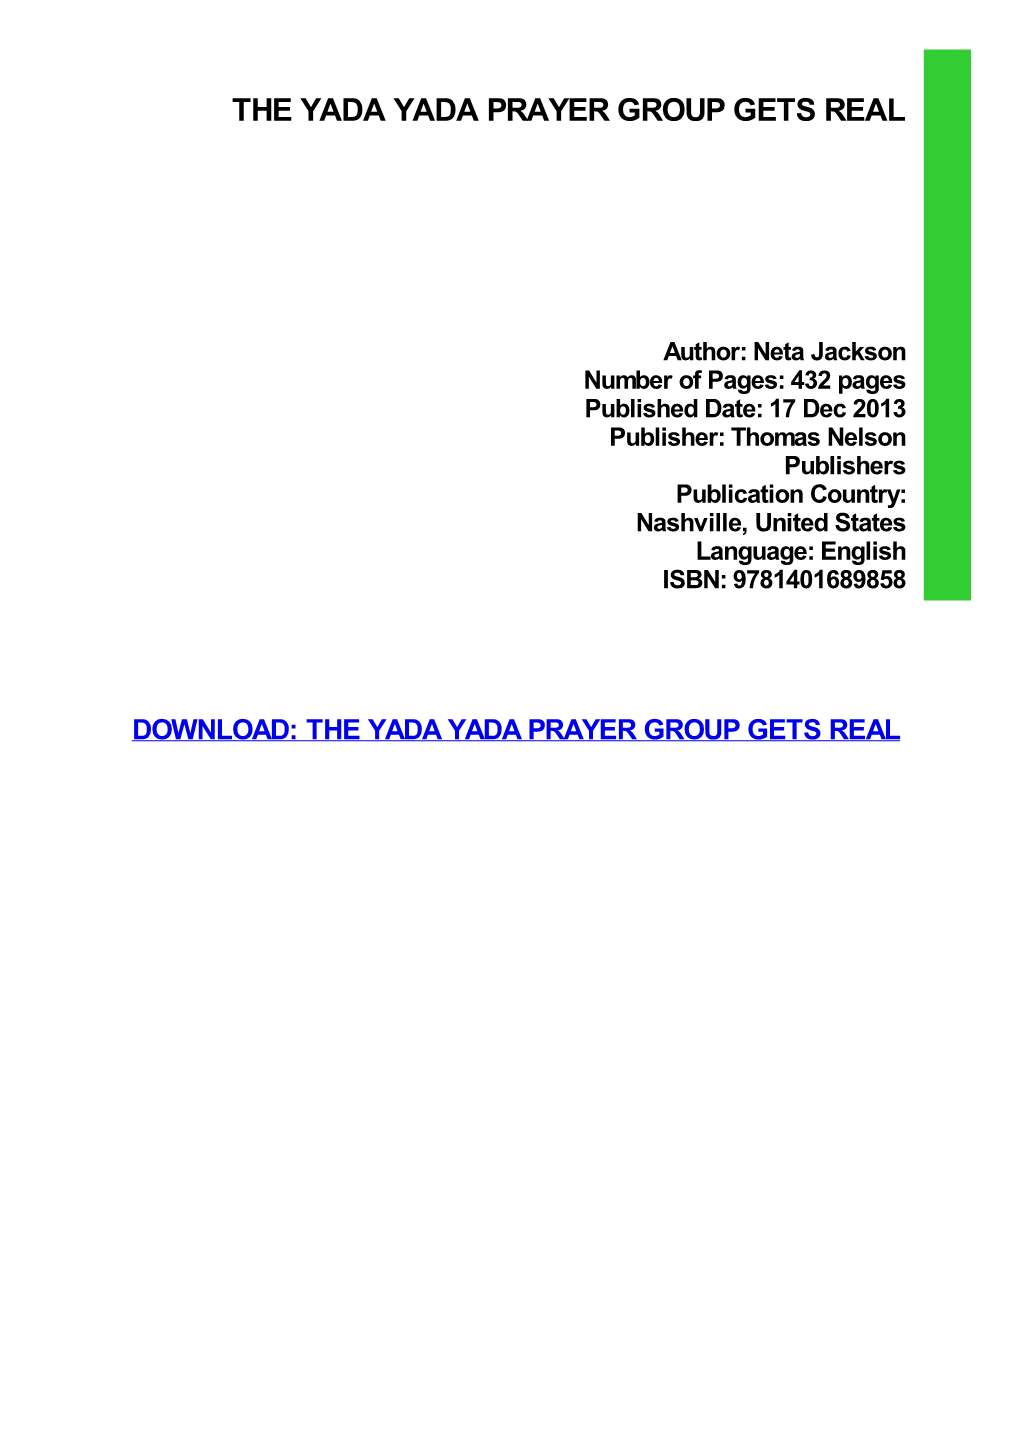 The Yada Yada Prayer Group Gets Real Pdf Free Download